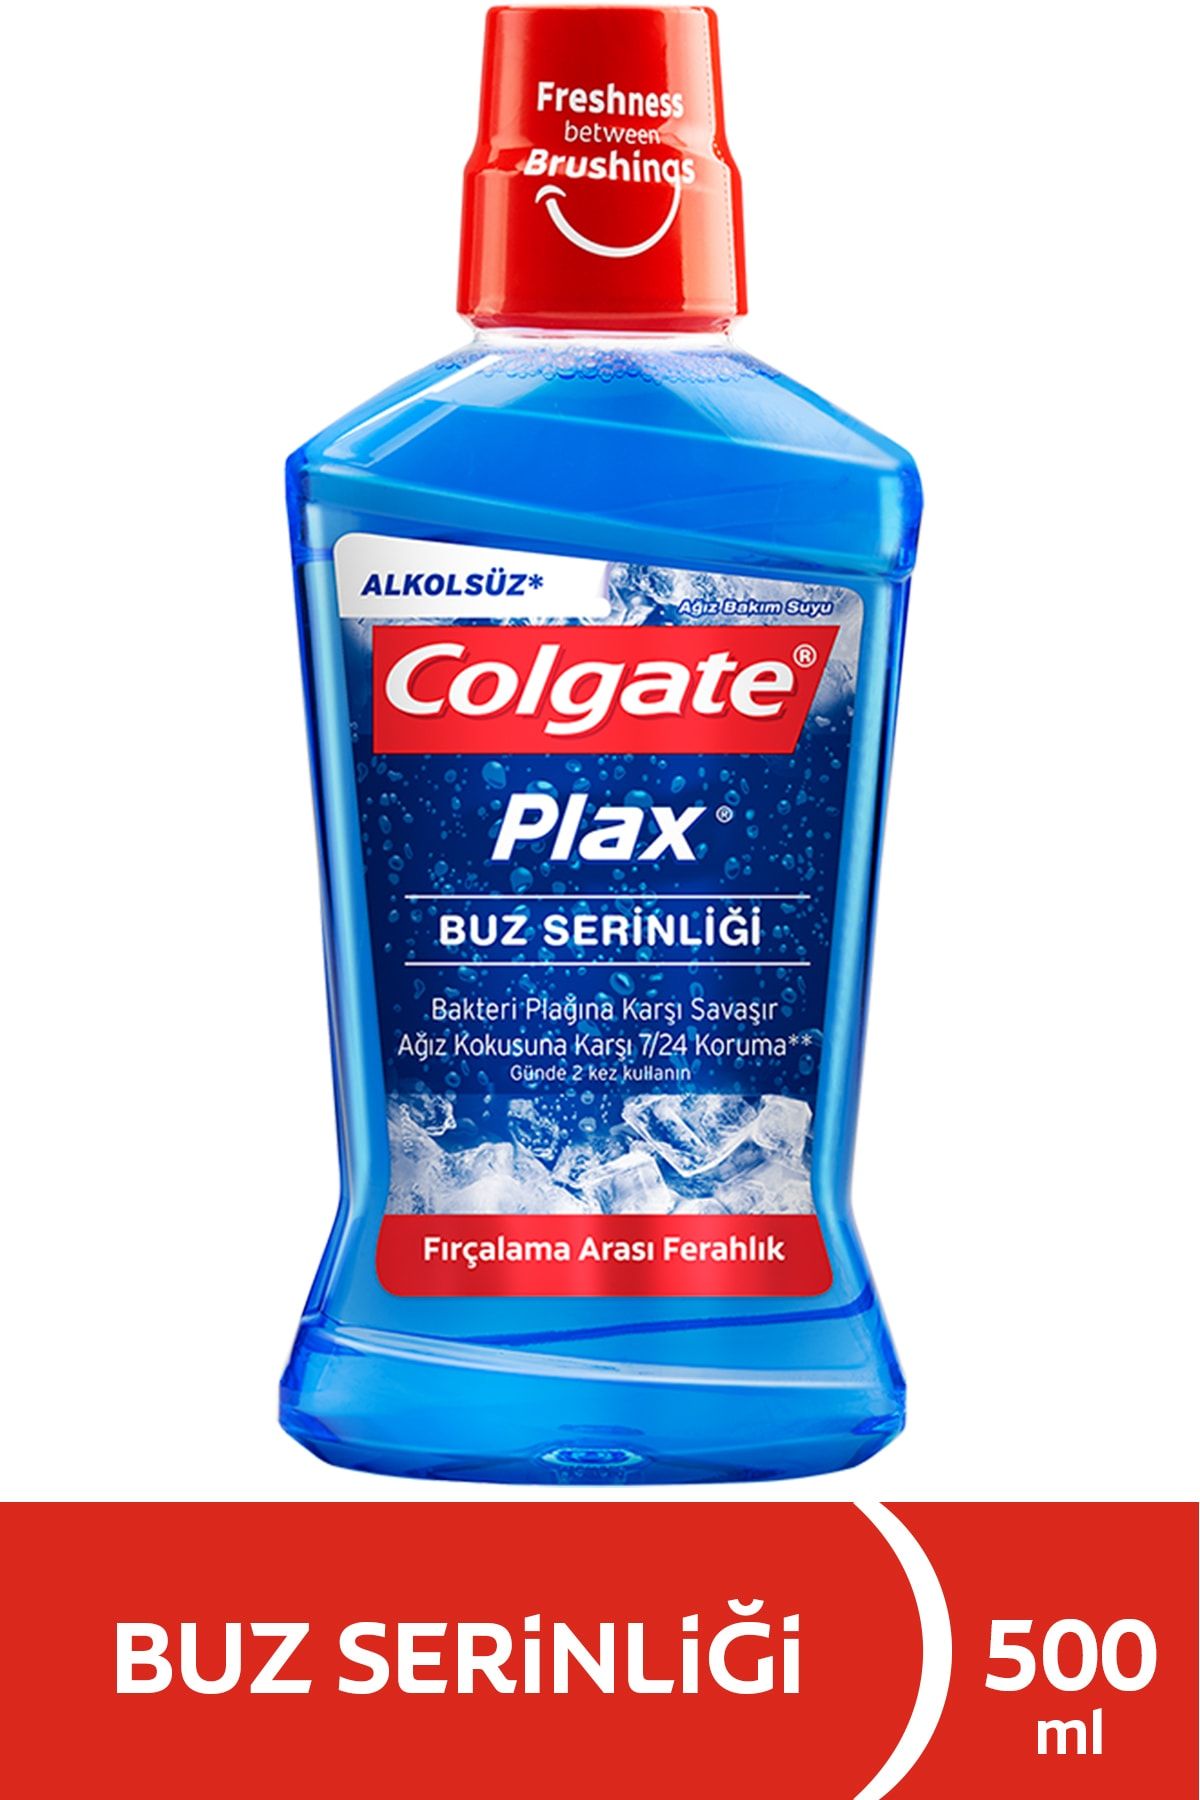 Colgate Plax Buz Serinliği Alkolsüz gargara 500 ml